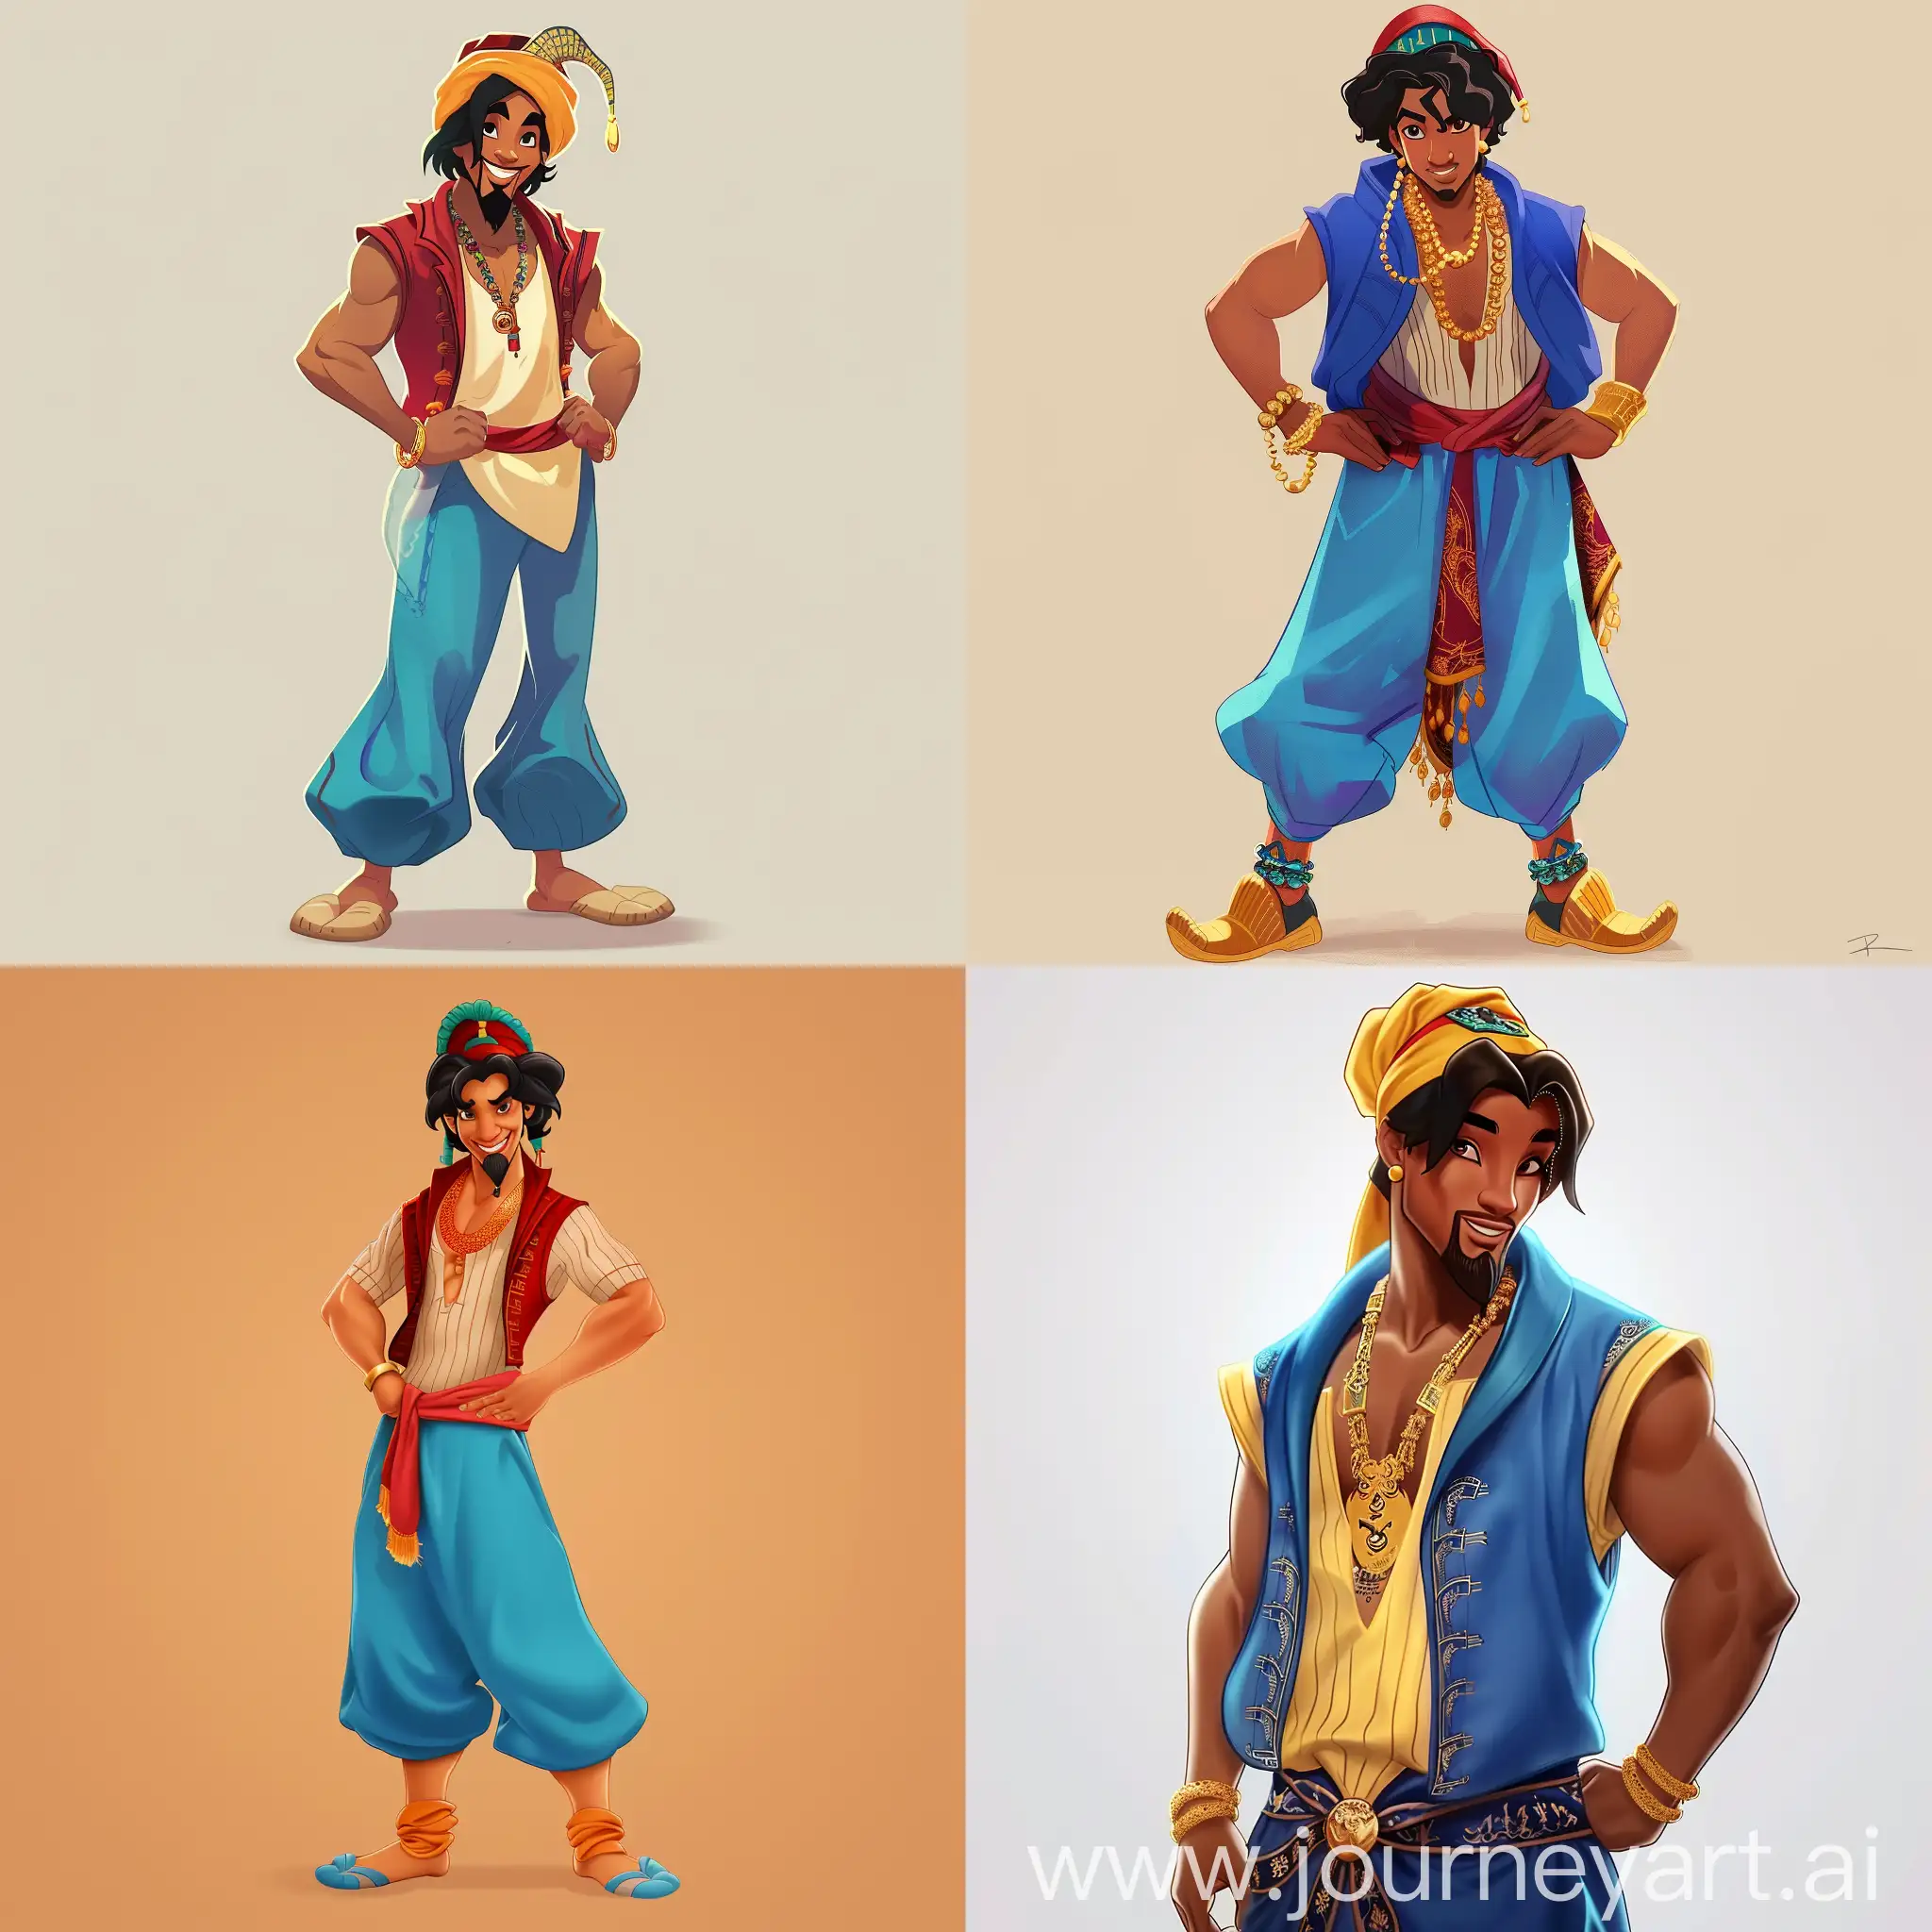 Cartoon Image, Disney's Aladdin dressed like a thug